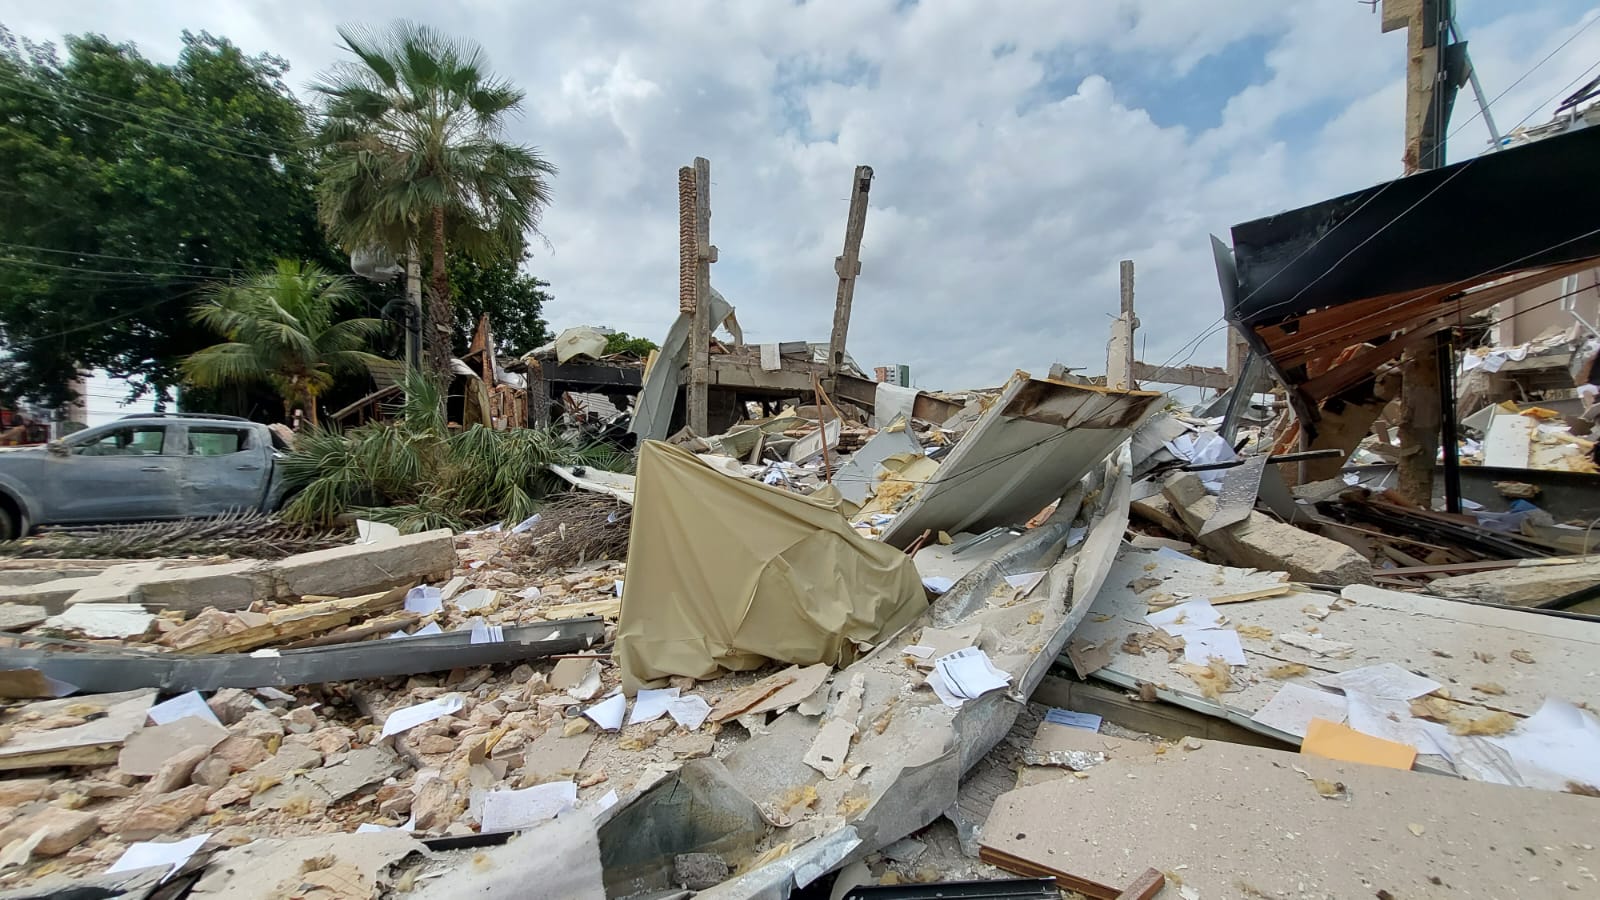 Forte explosão destrói Vasto Restaurante na zona Leste de Teresina